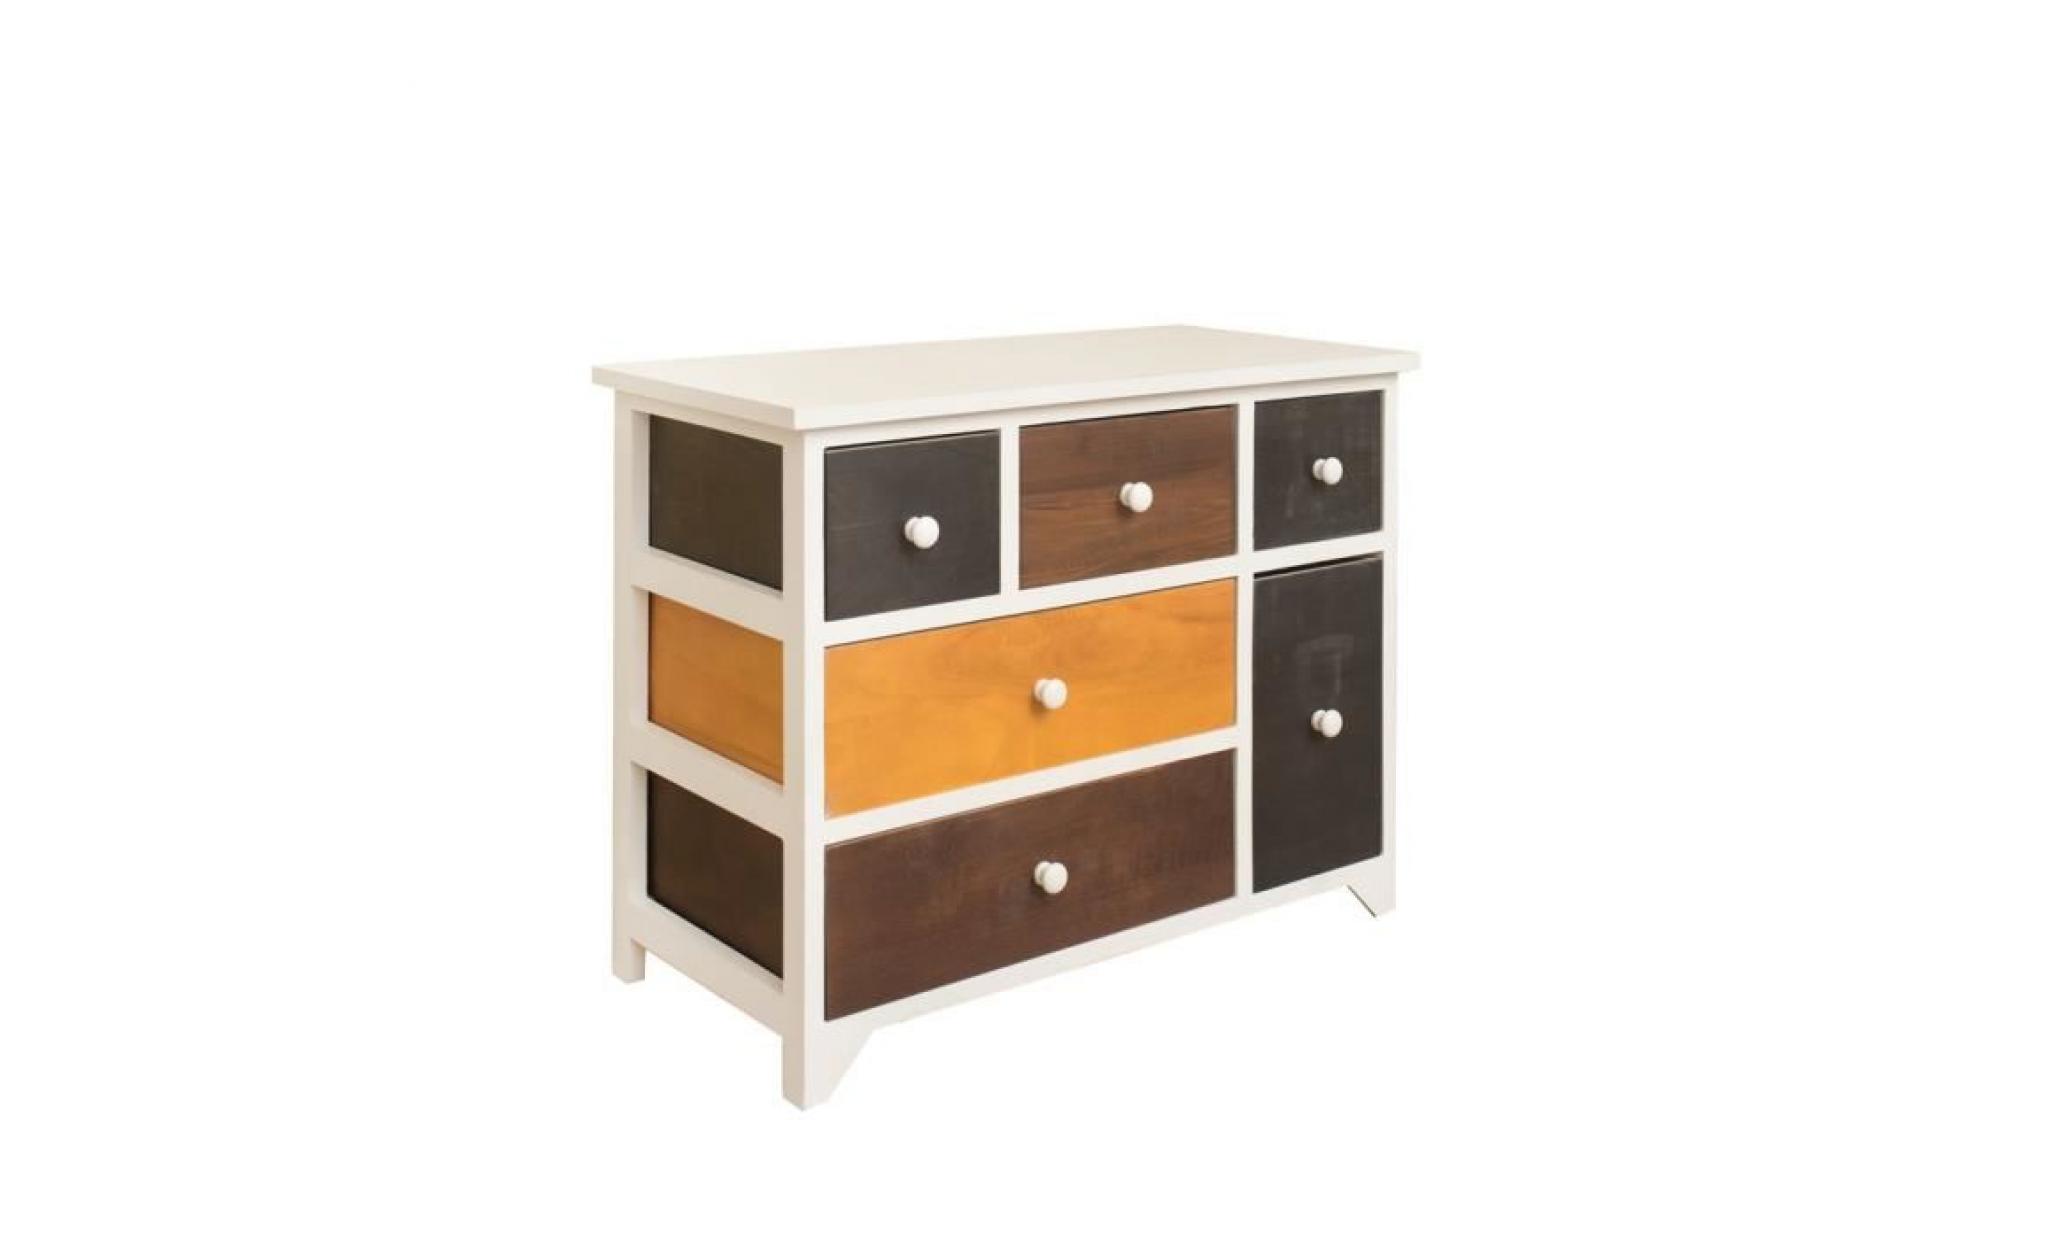 armoire commode meuble à tiroir blanc atlantica 6 tiroirs coloré urban chic